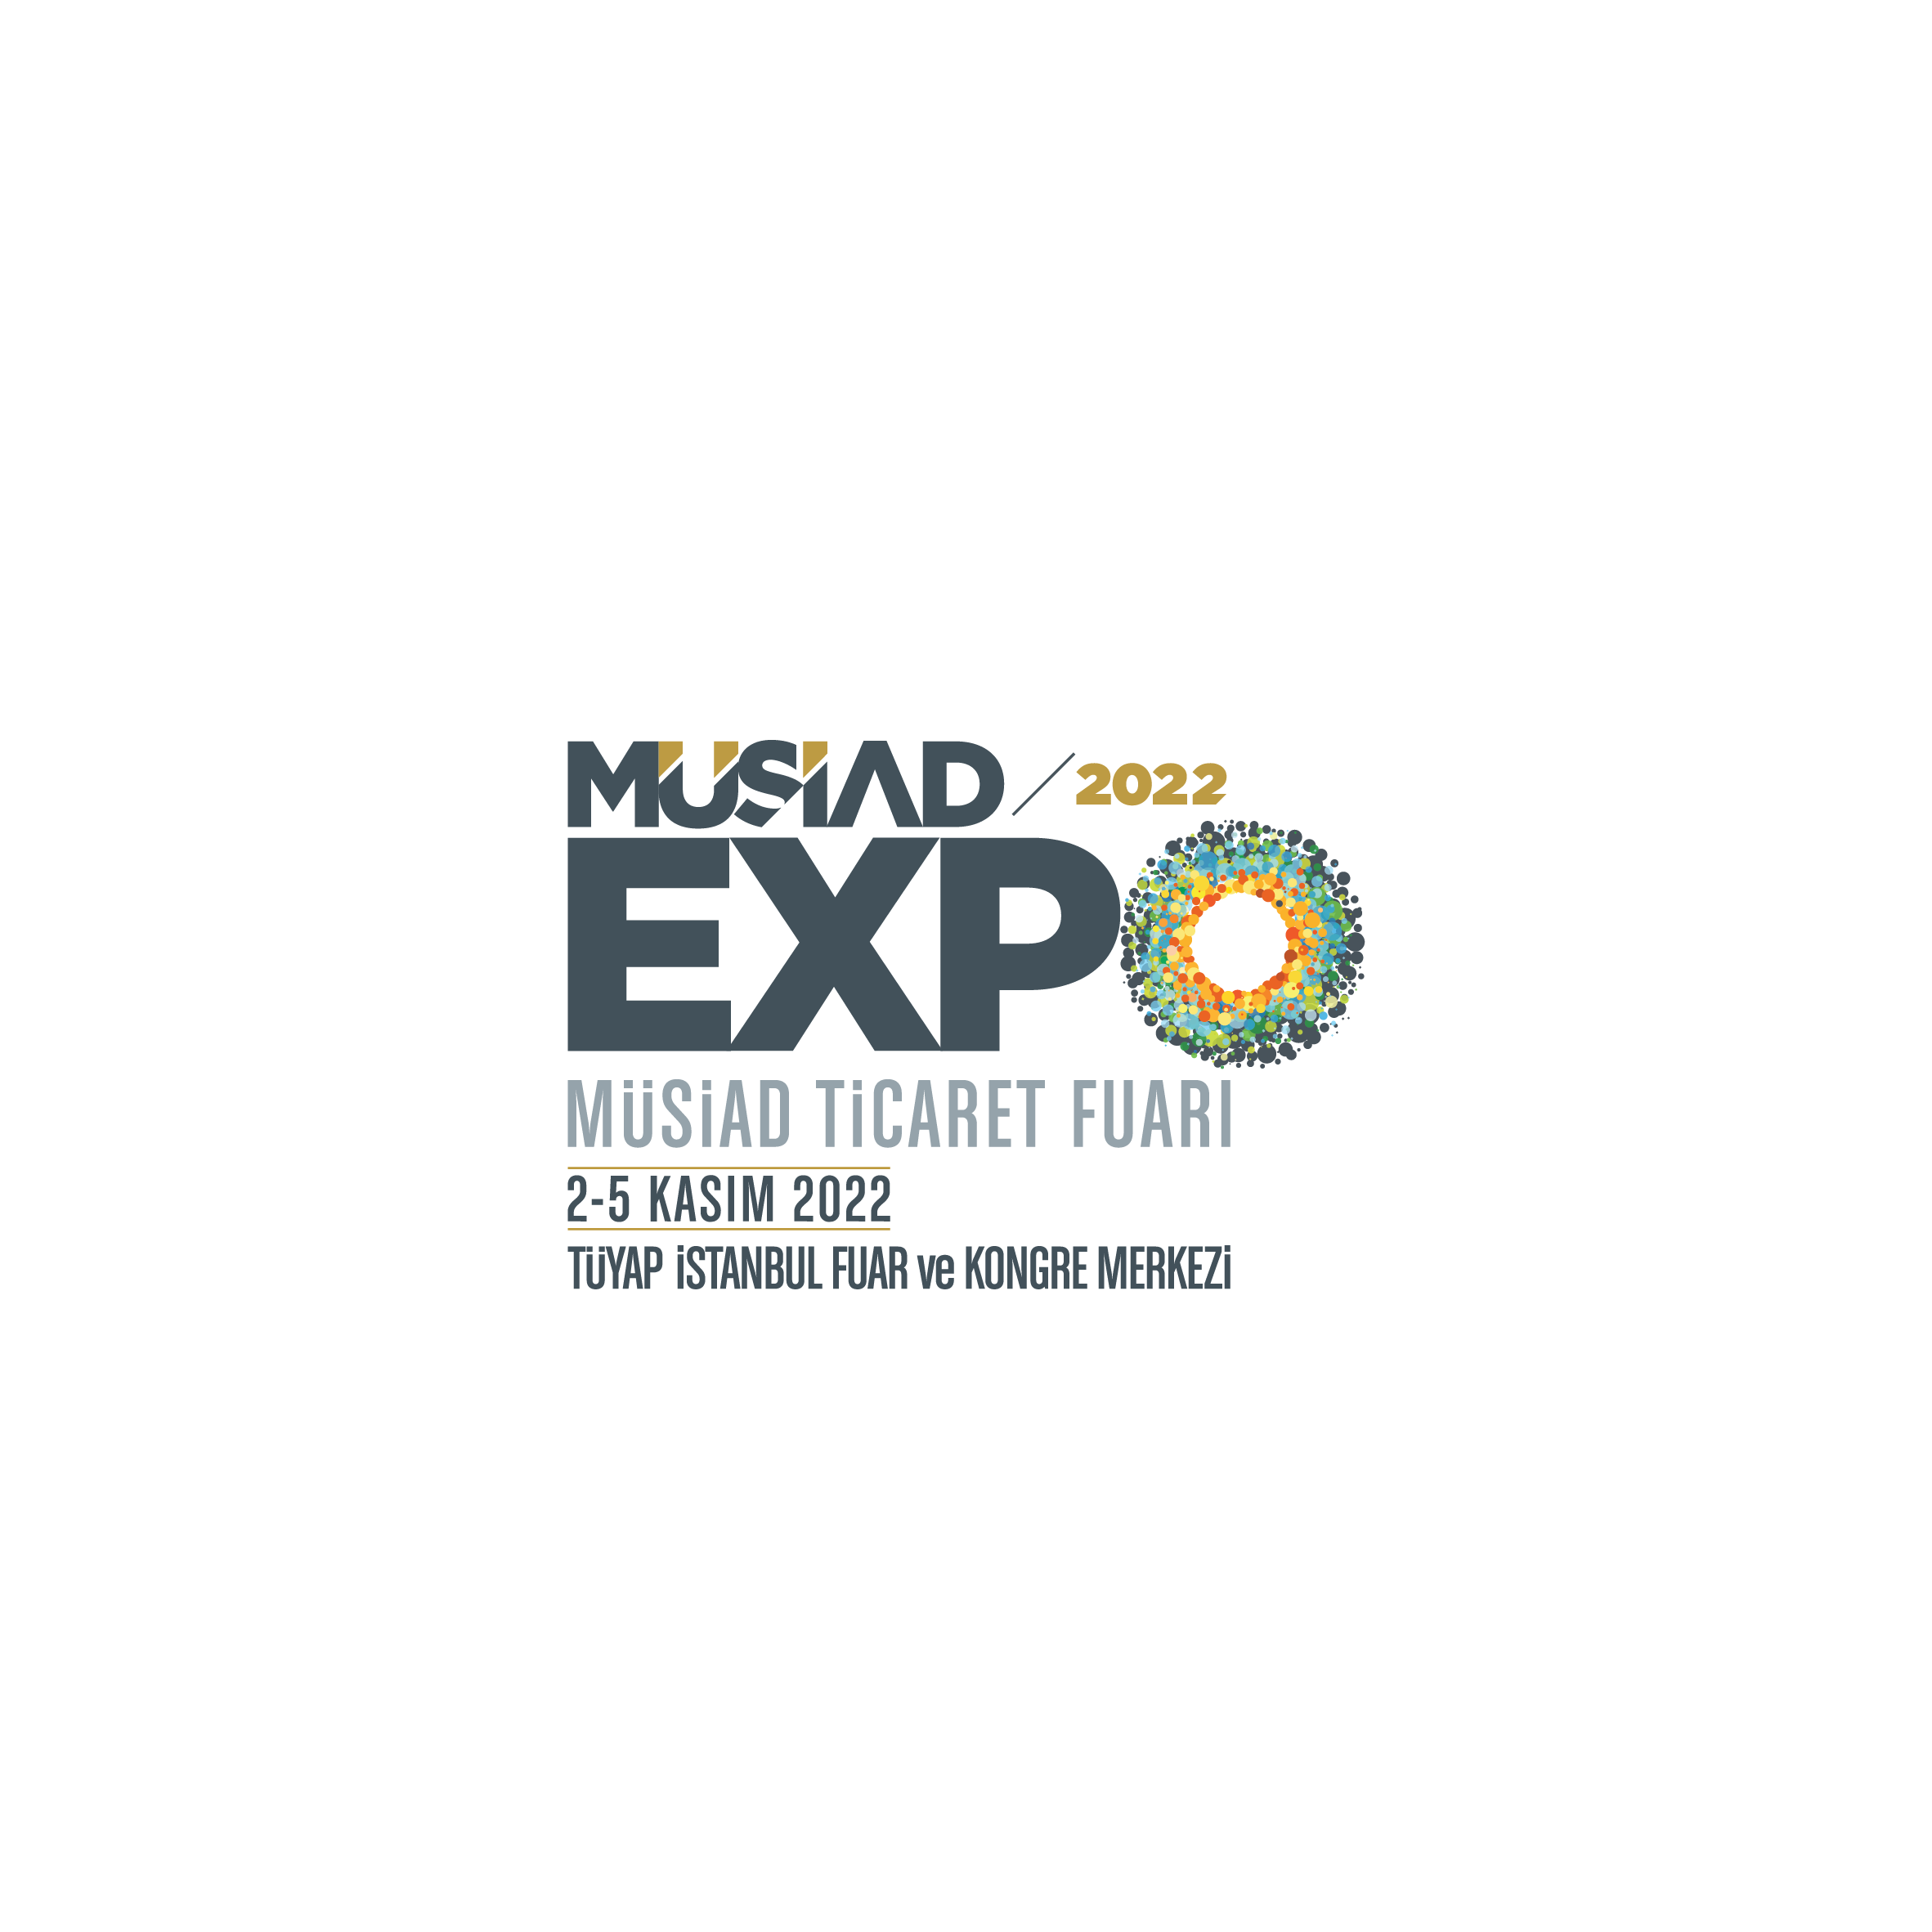 Be a Part of the MUSIAD EXPO 2022 Fair